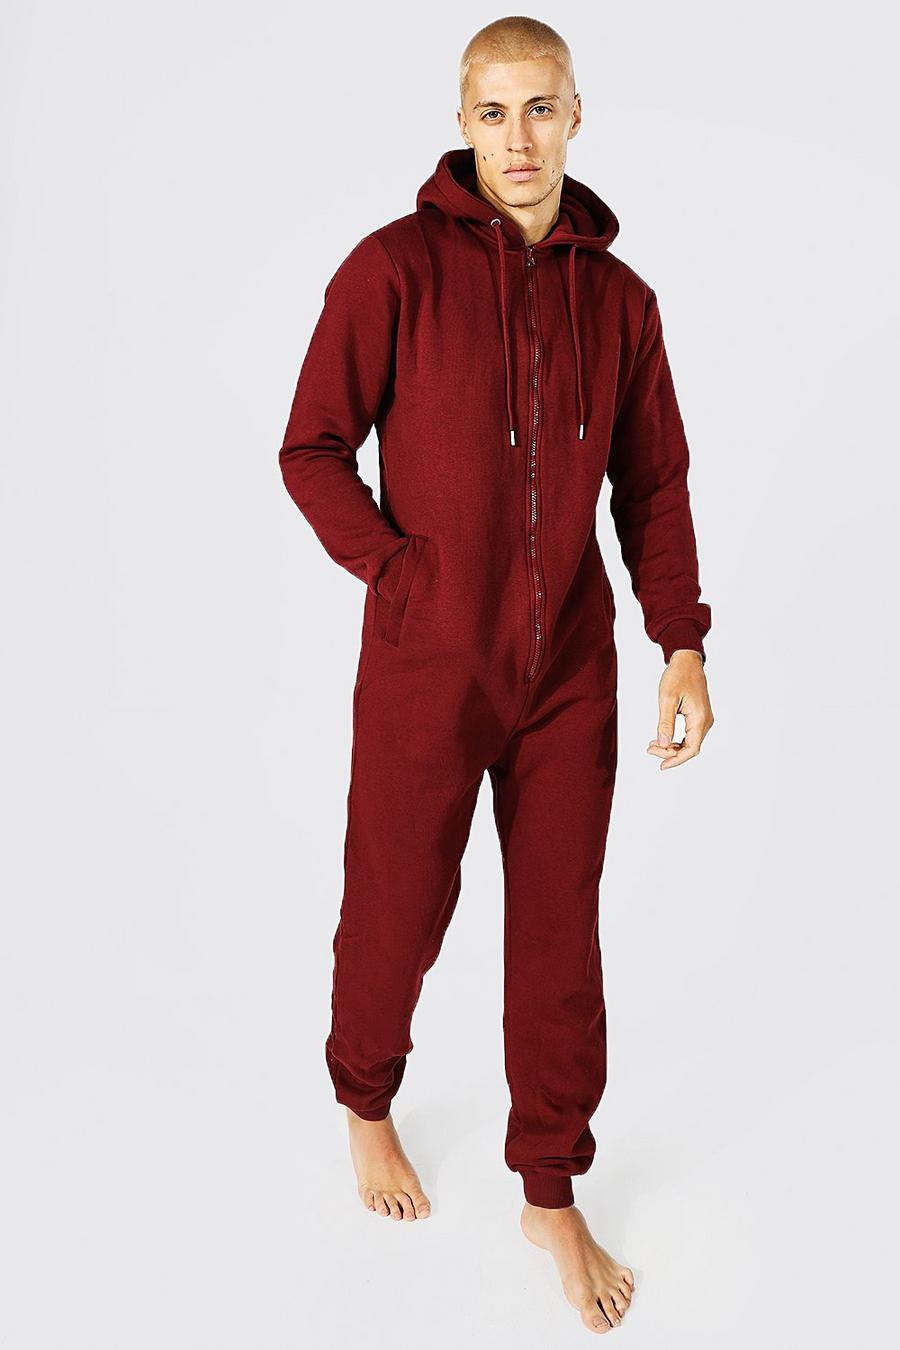 Pijama enterizo de tela jersey con capucha, Burgundy rojo image number 1